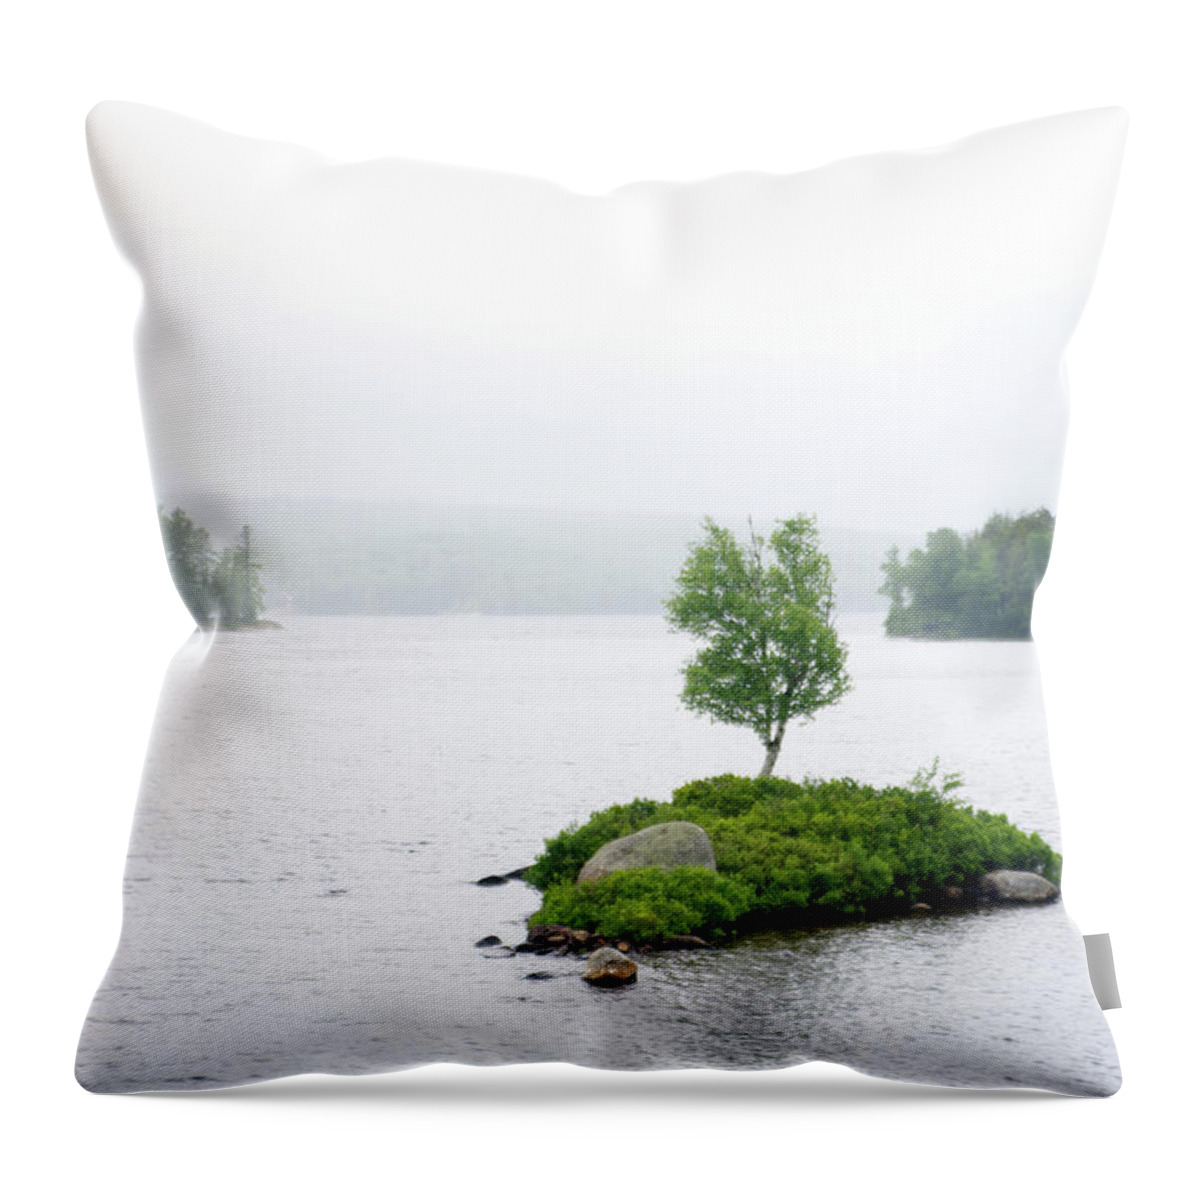 Adirondacks Throw Pillow featuring the photograph Adirondacks Tupper Lake Region by Flinn Hackett